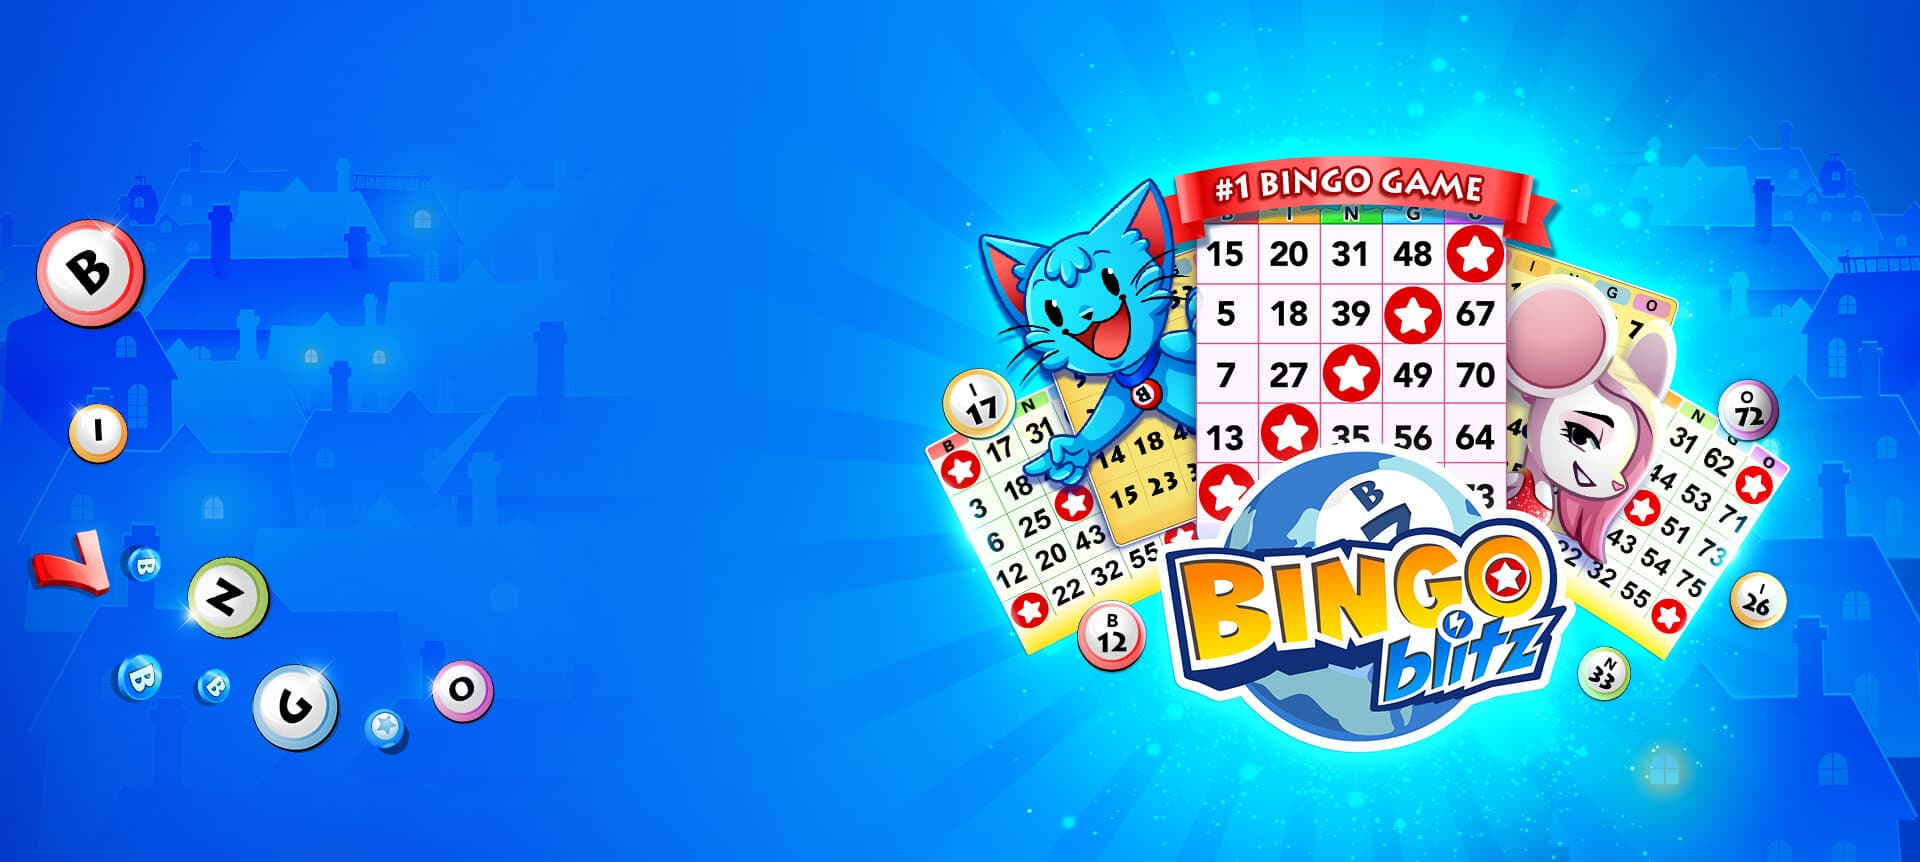 free online bingo games no download required